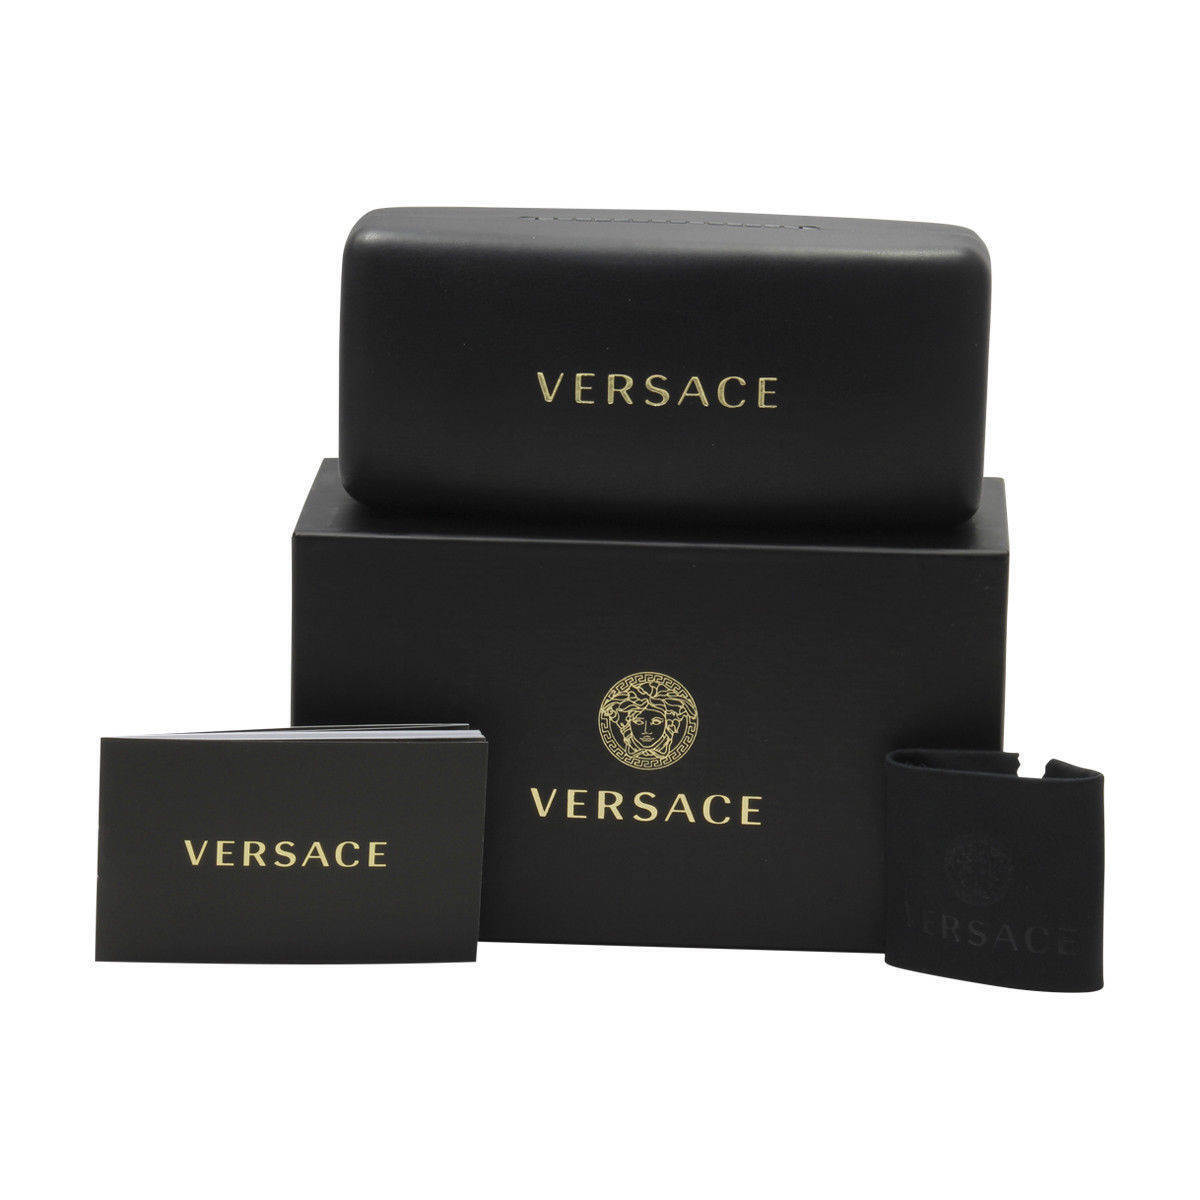 Versace VE4409-108/73 53mm New Sunglasses